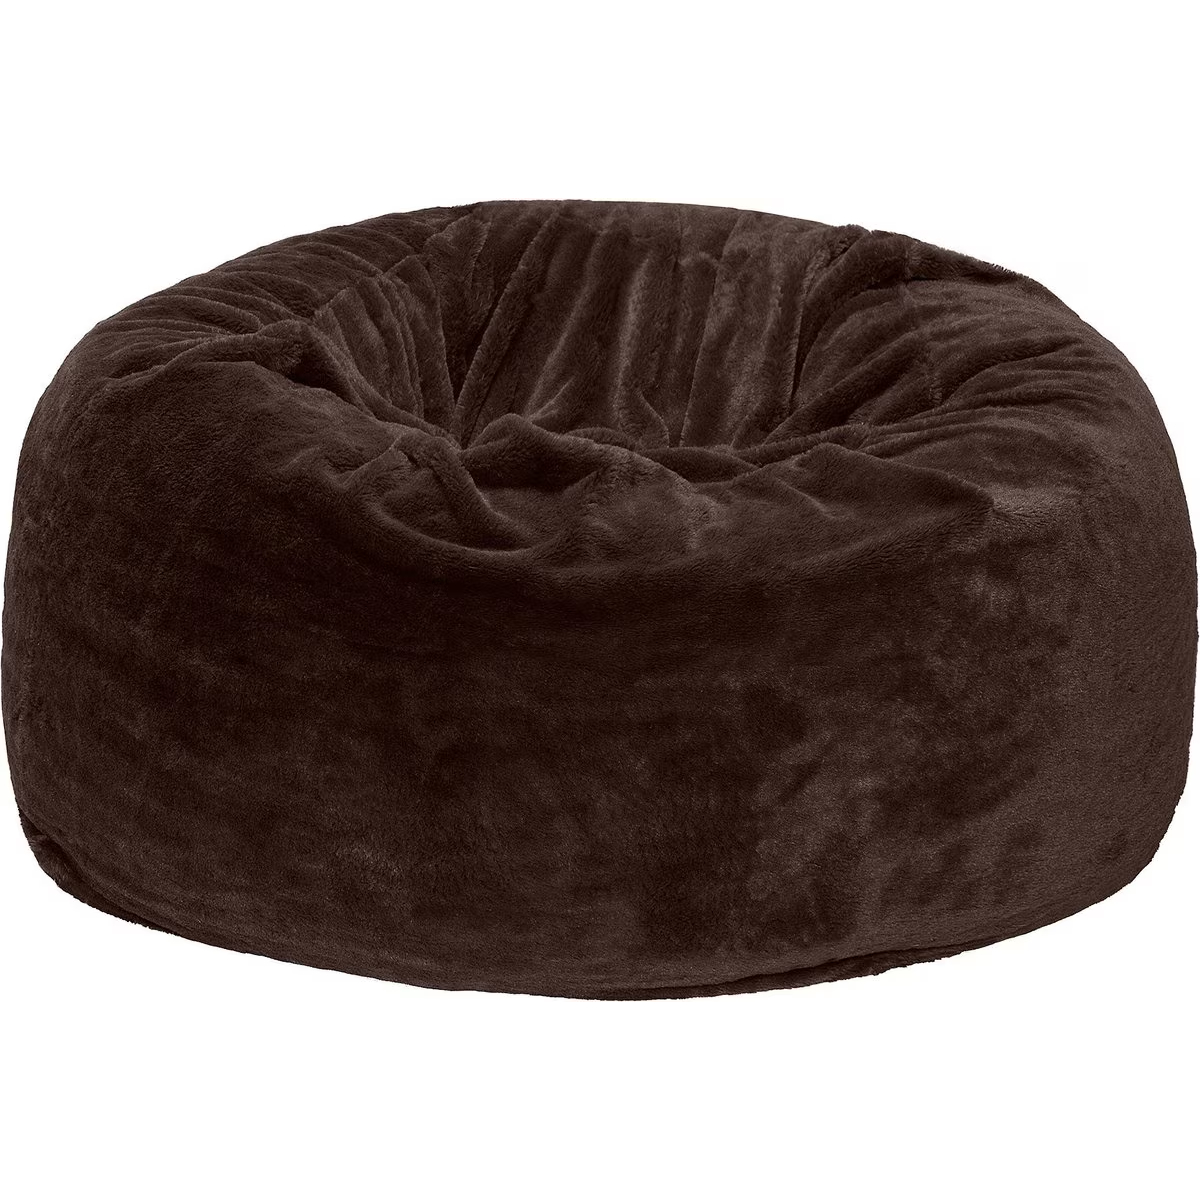 FurHaven Plush Ball Pillow Dog Bed